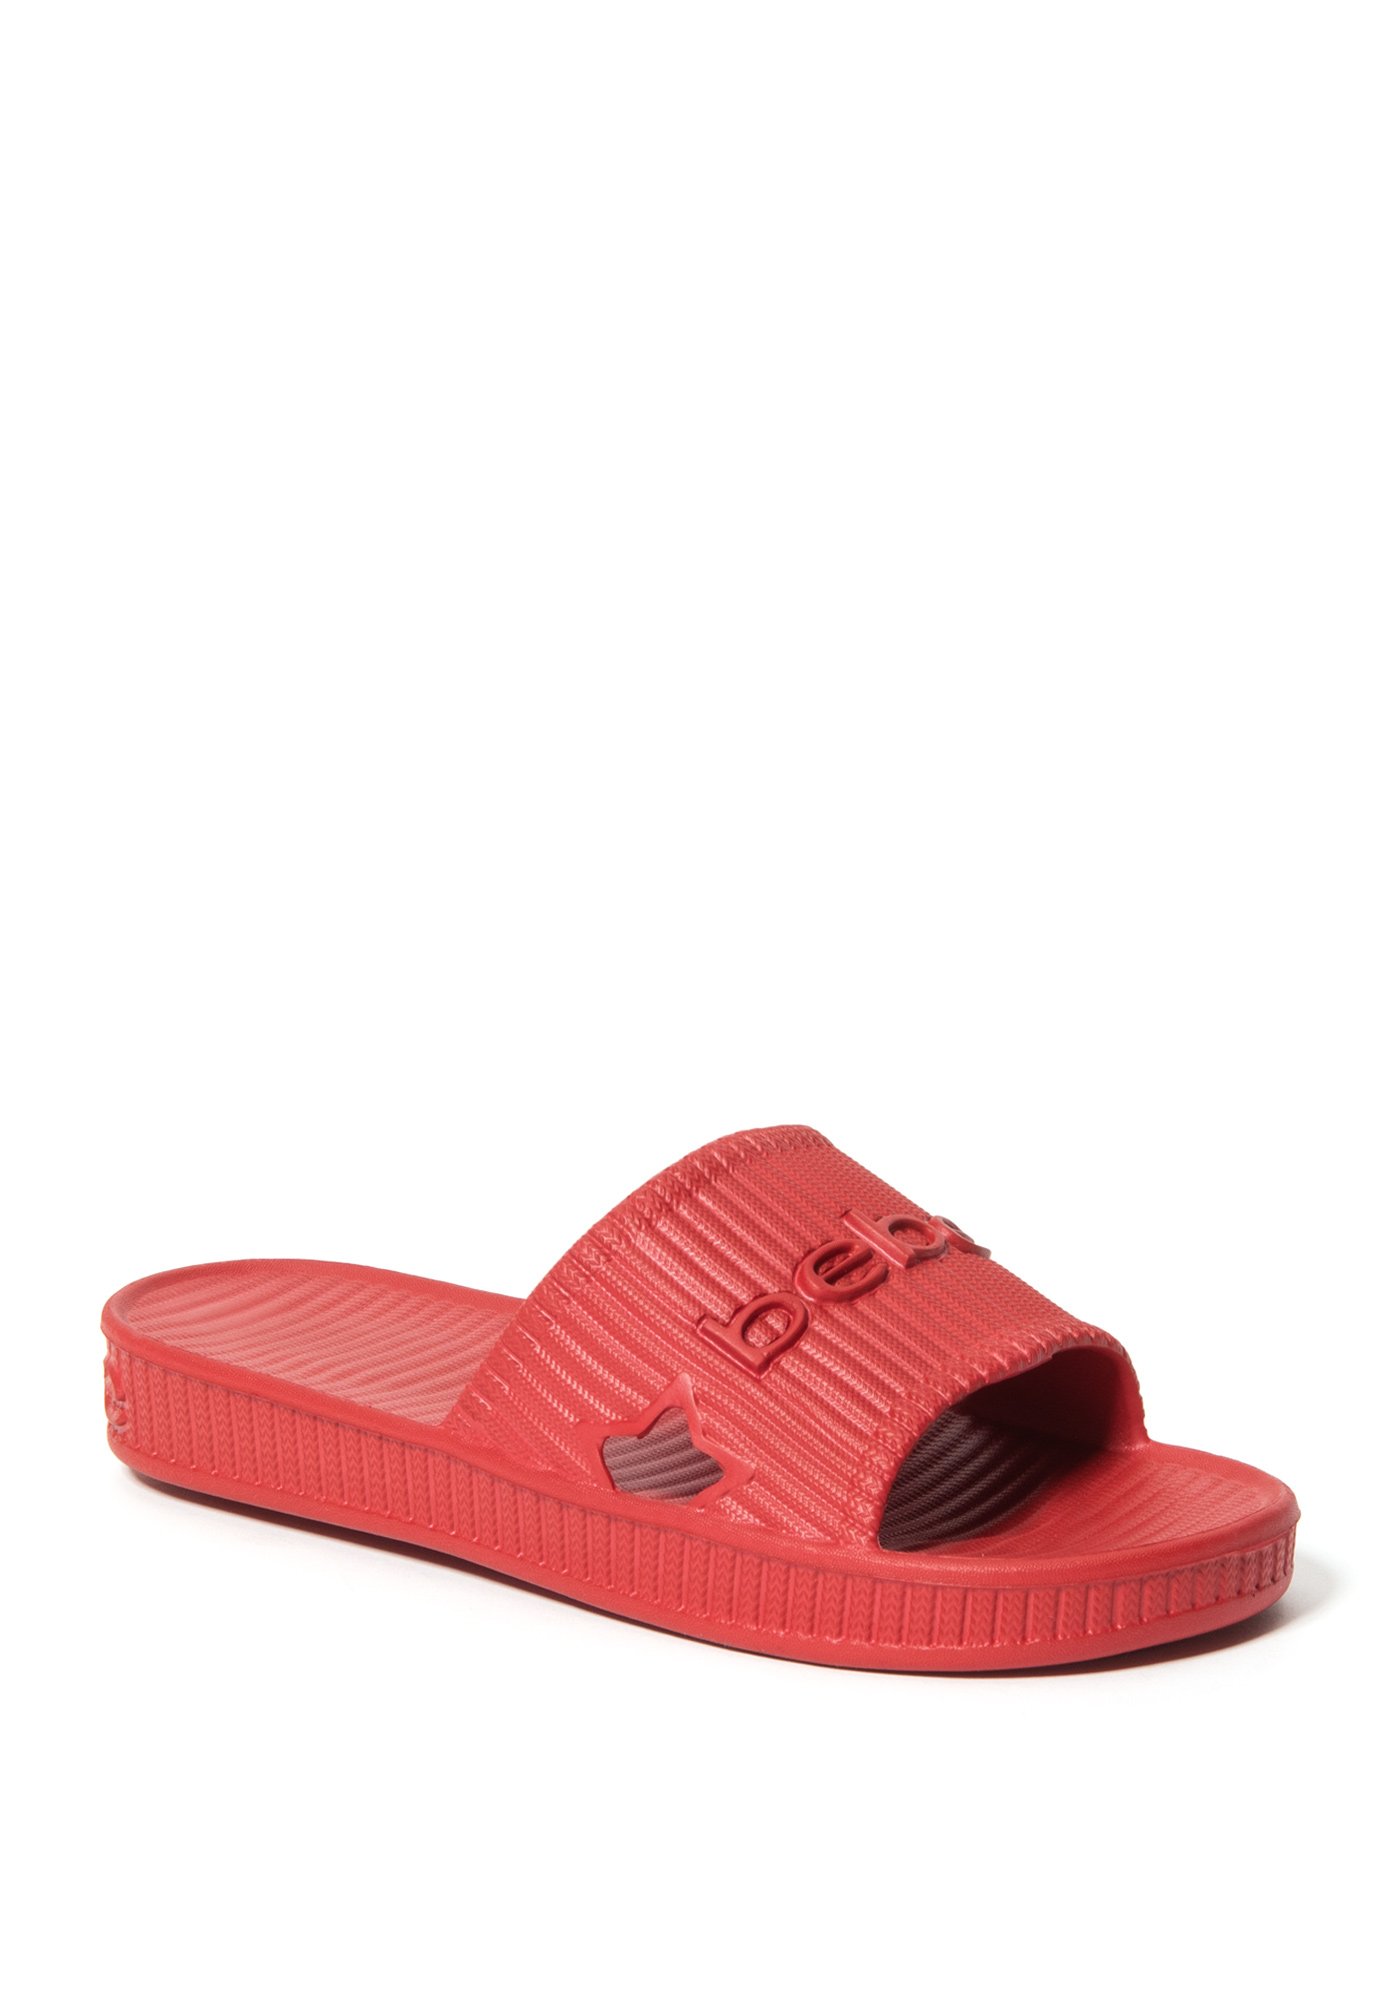 Bebe Women's Craze Logo Slides Shoe, Size 8 in Red O Synthetic